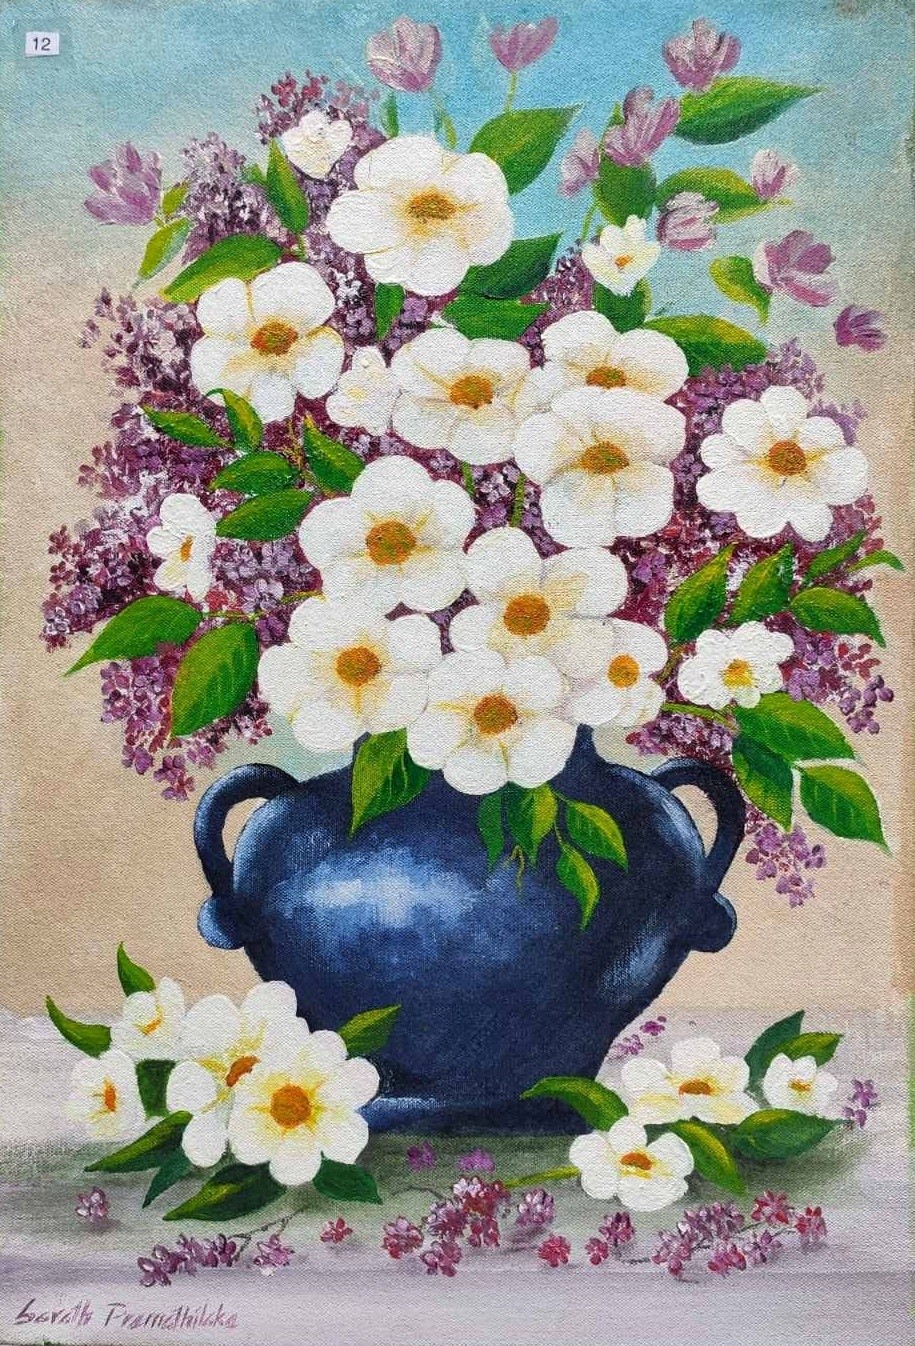 The flower vase by Sarath Premathilake